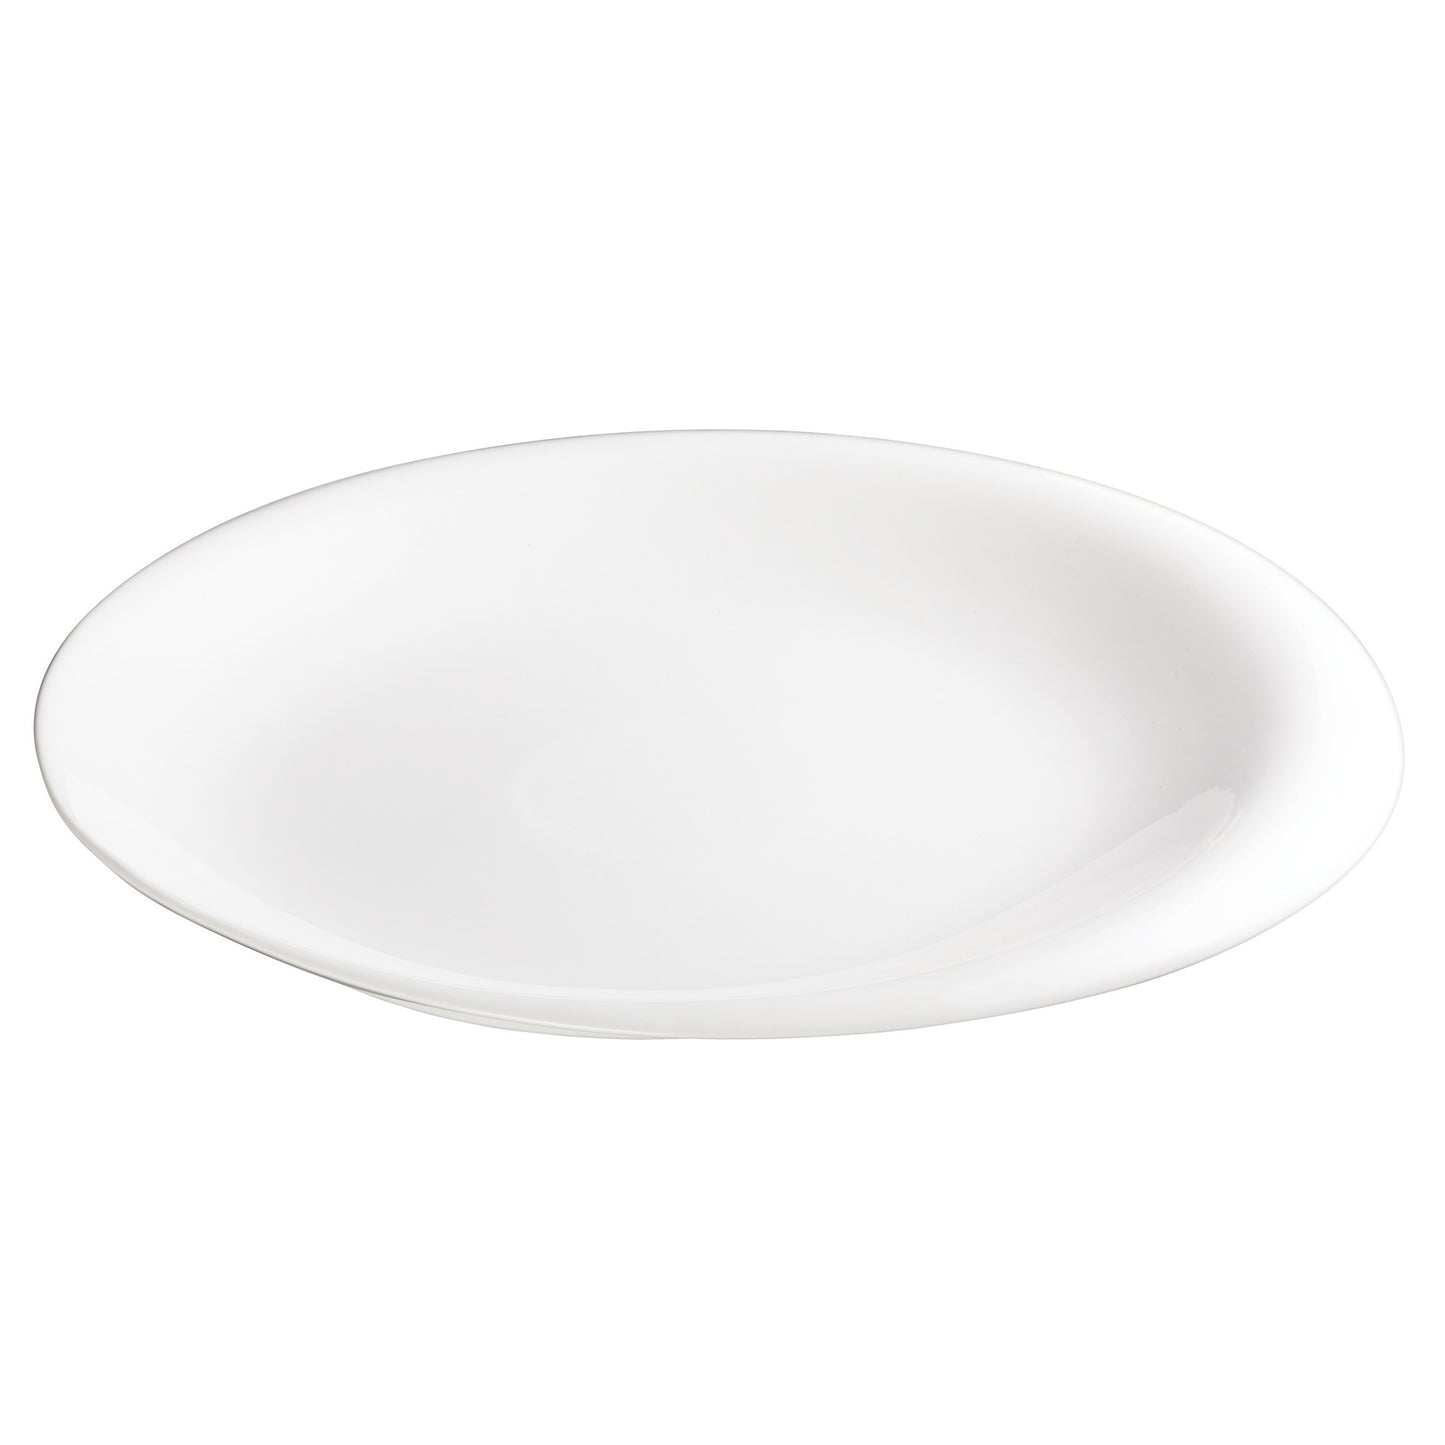 WDP004-204 - 14"Dia. Porcelain Round Plate, Creamy White, 12 pcs/case